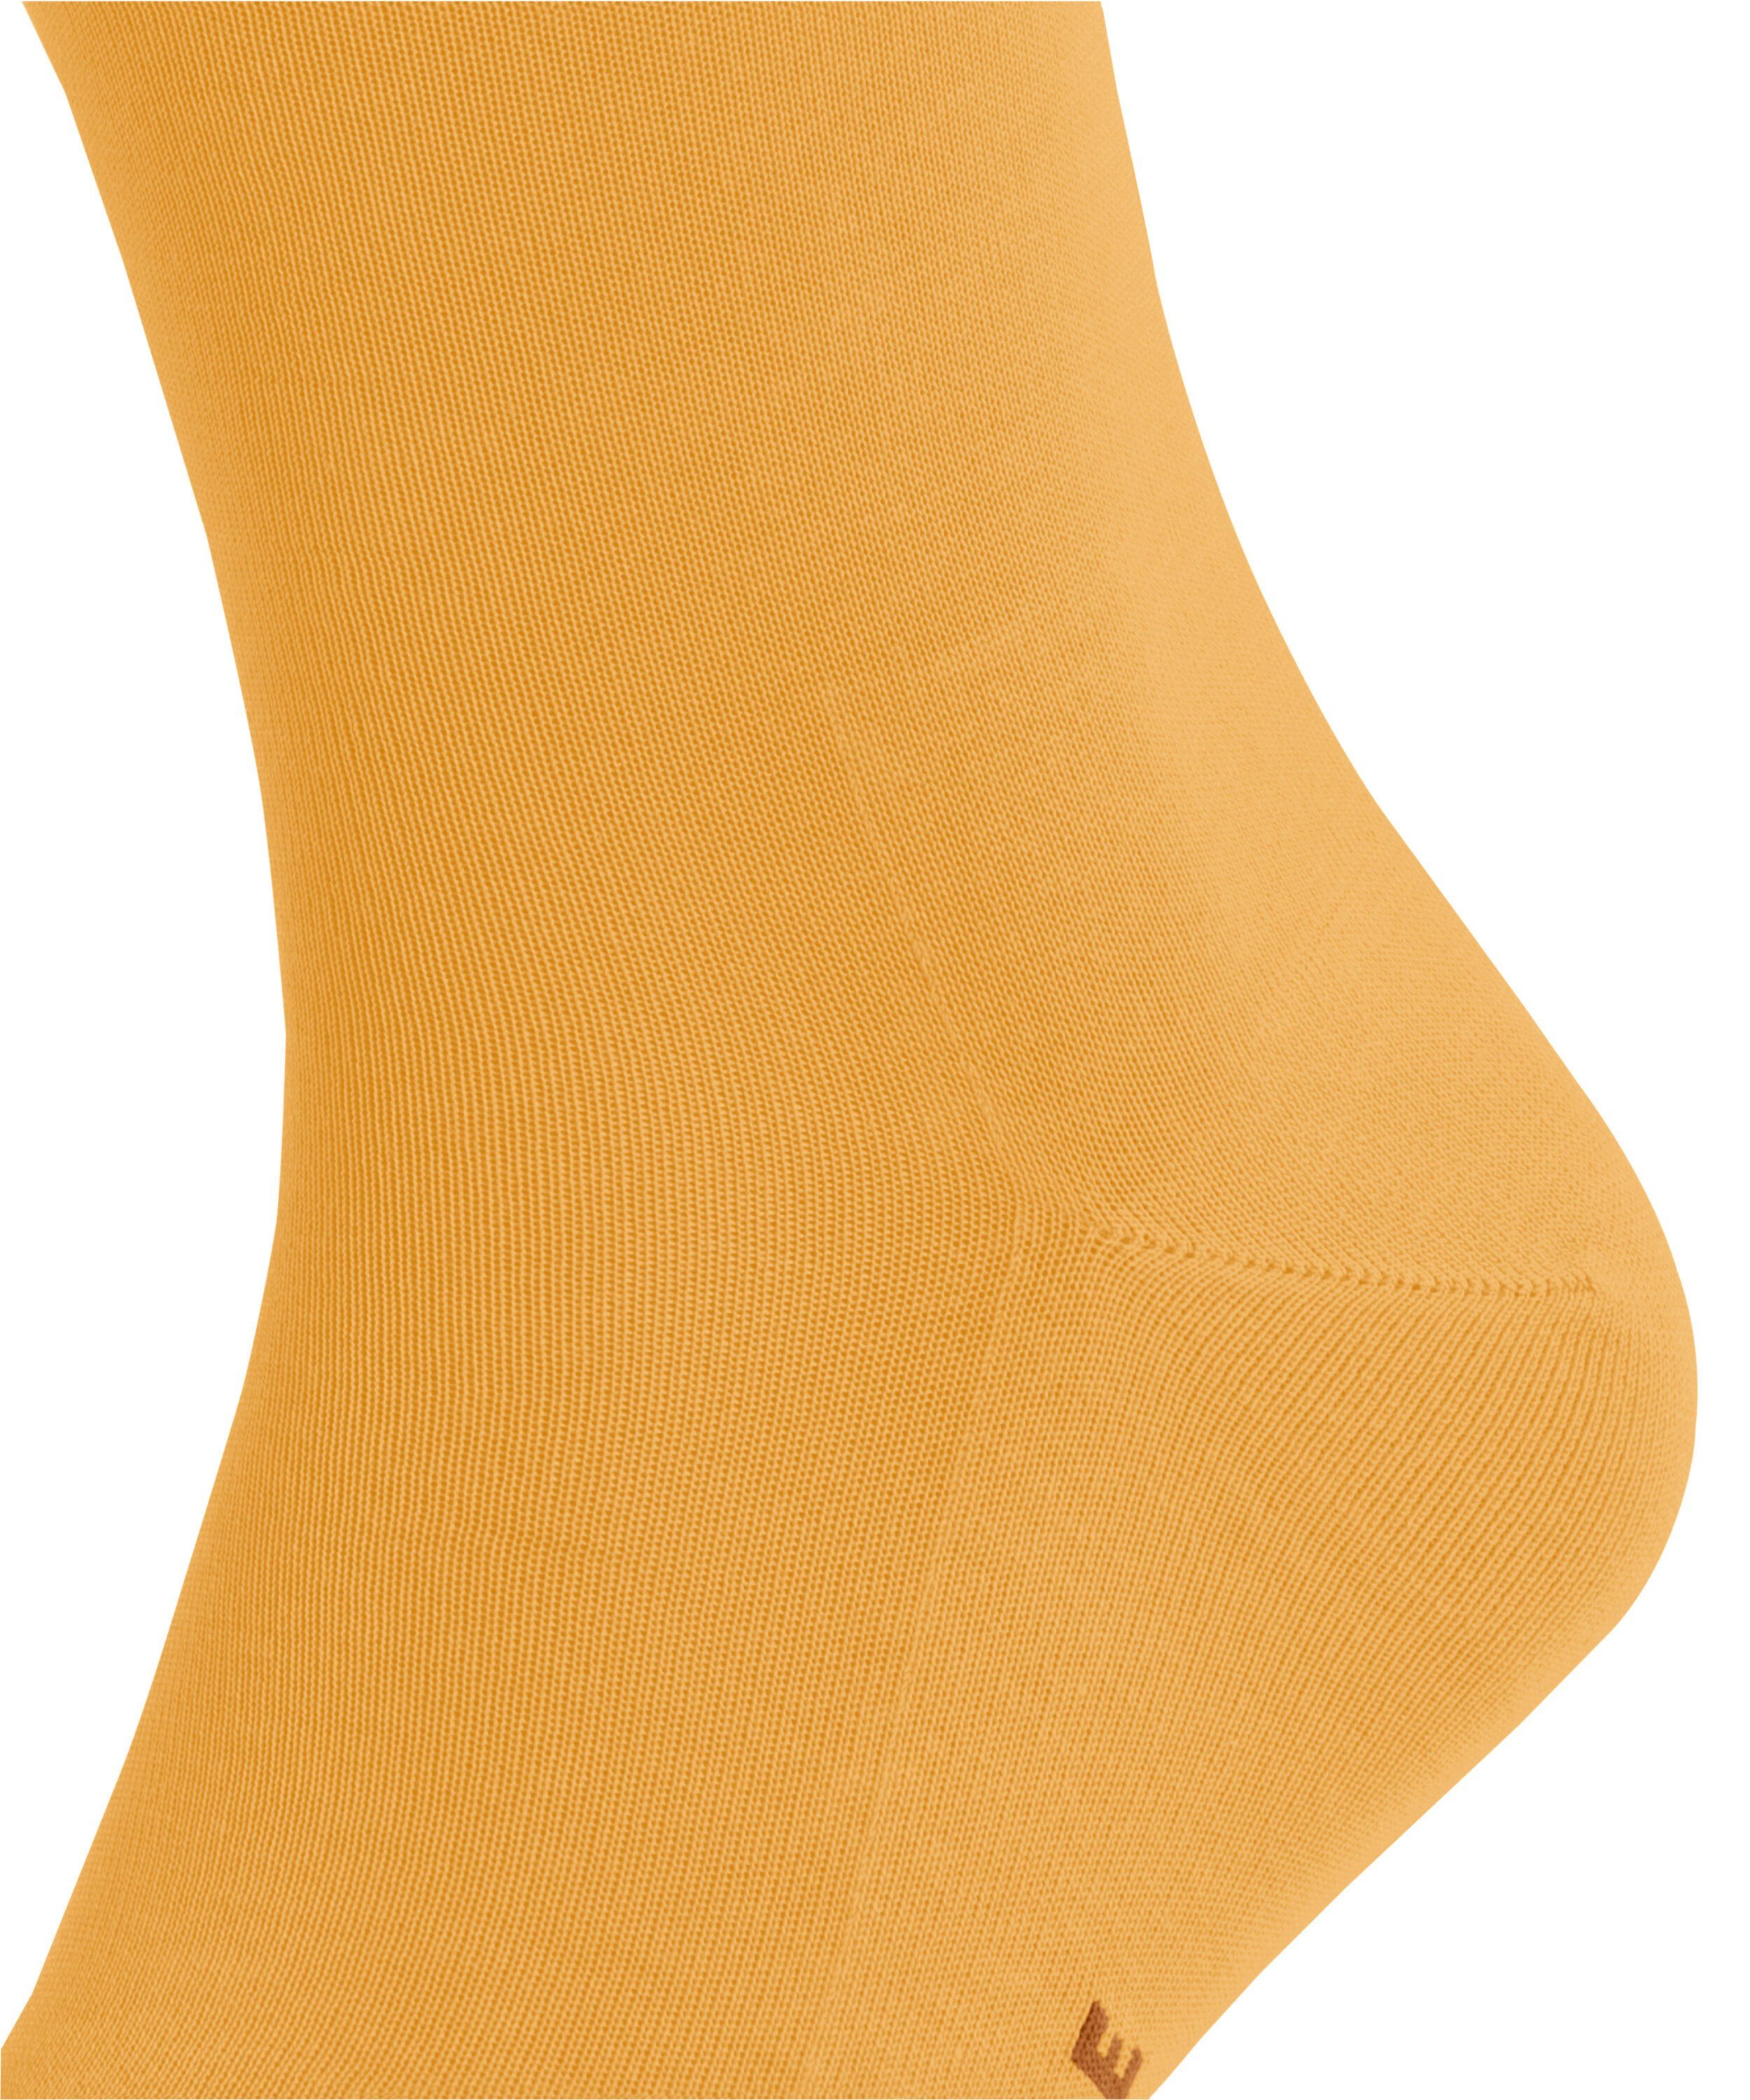 (1282) ray Tiago (1-Paar) Socken FALKE hot